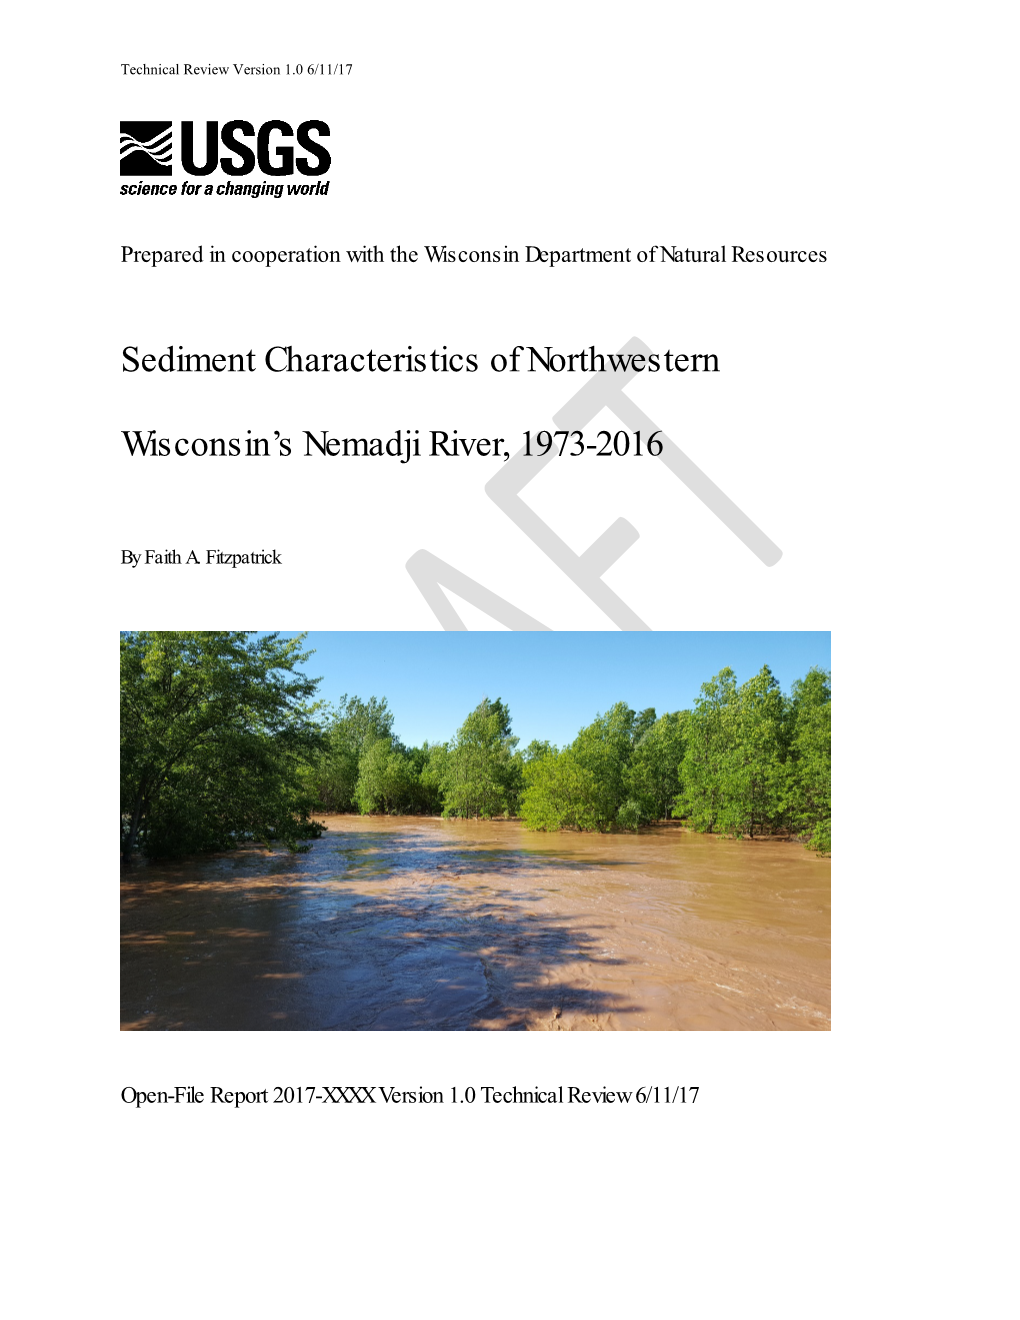 Sediment Characteristics of Northwestern Wisconsin's Nemadji